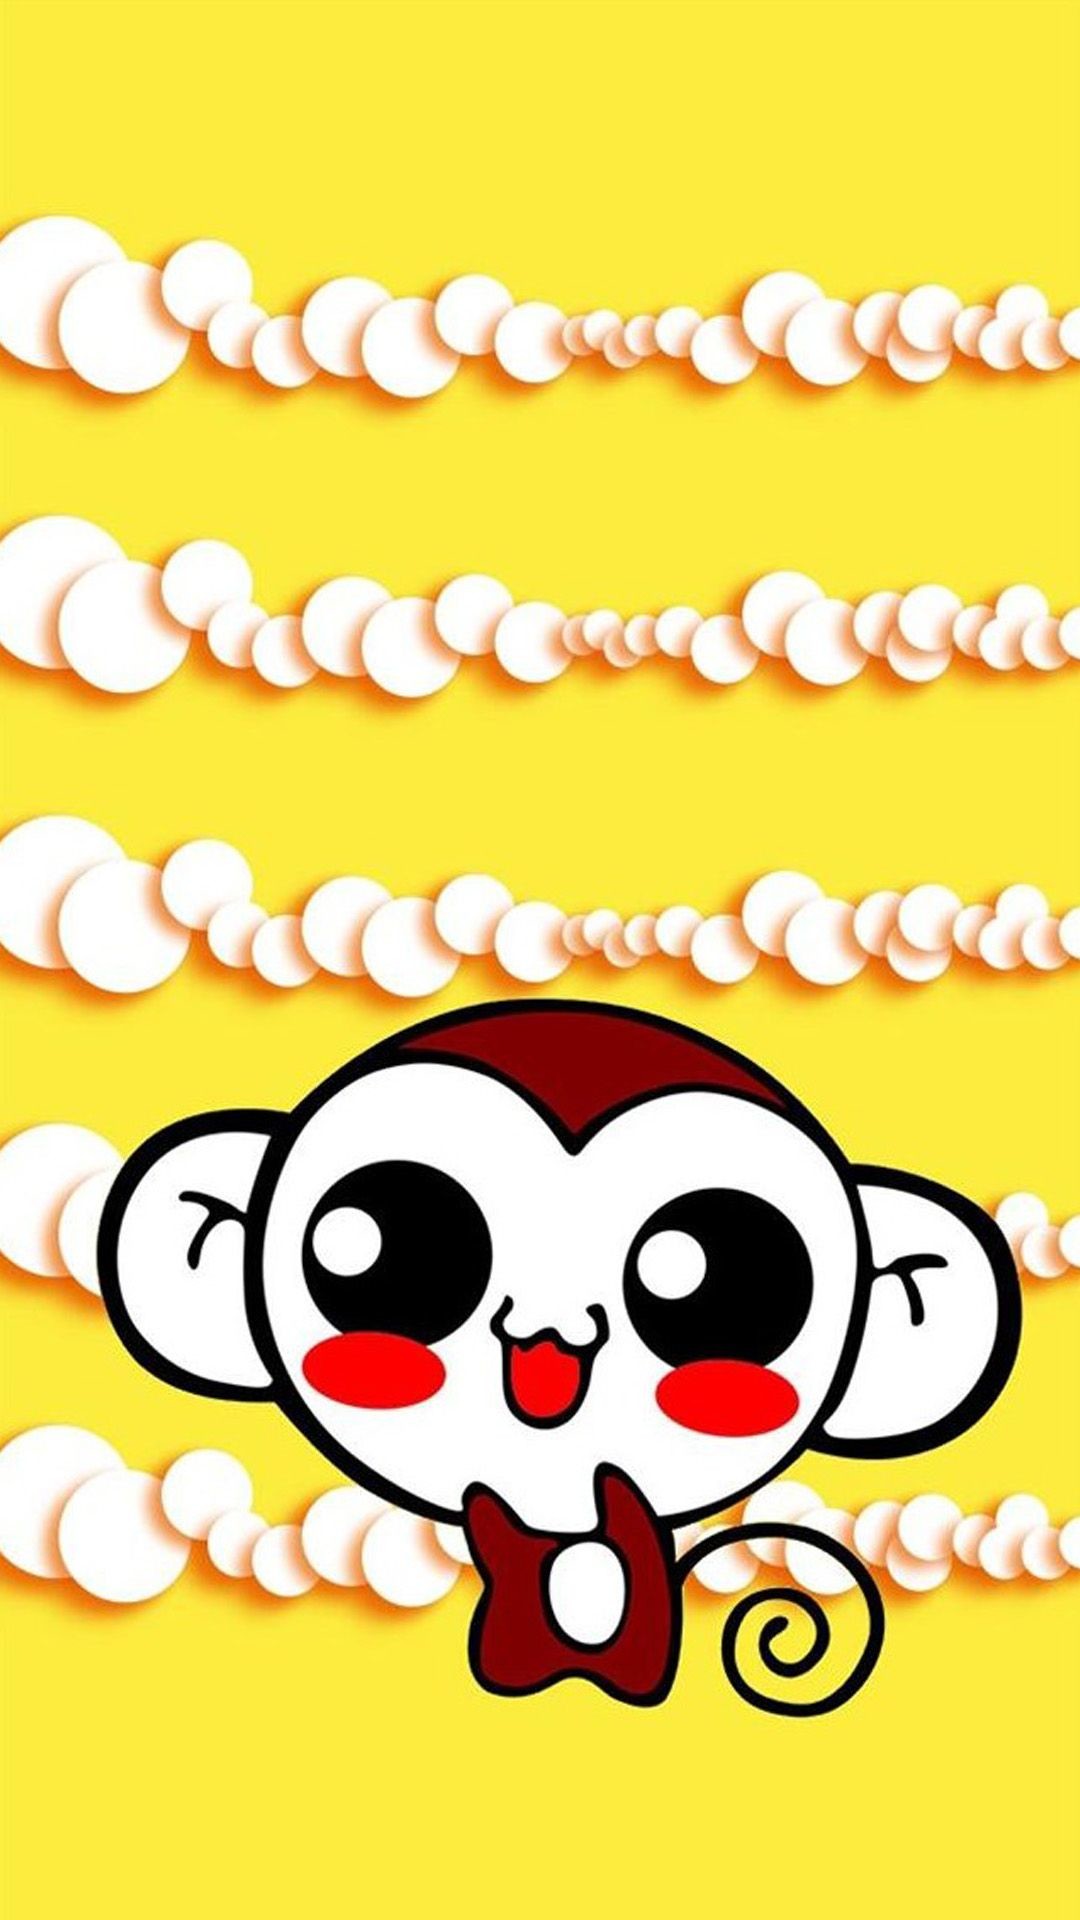 1080x1920 Cute Sweet Hippie Monkey iPhone 6 Wallpaper Download